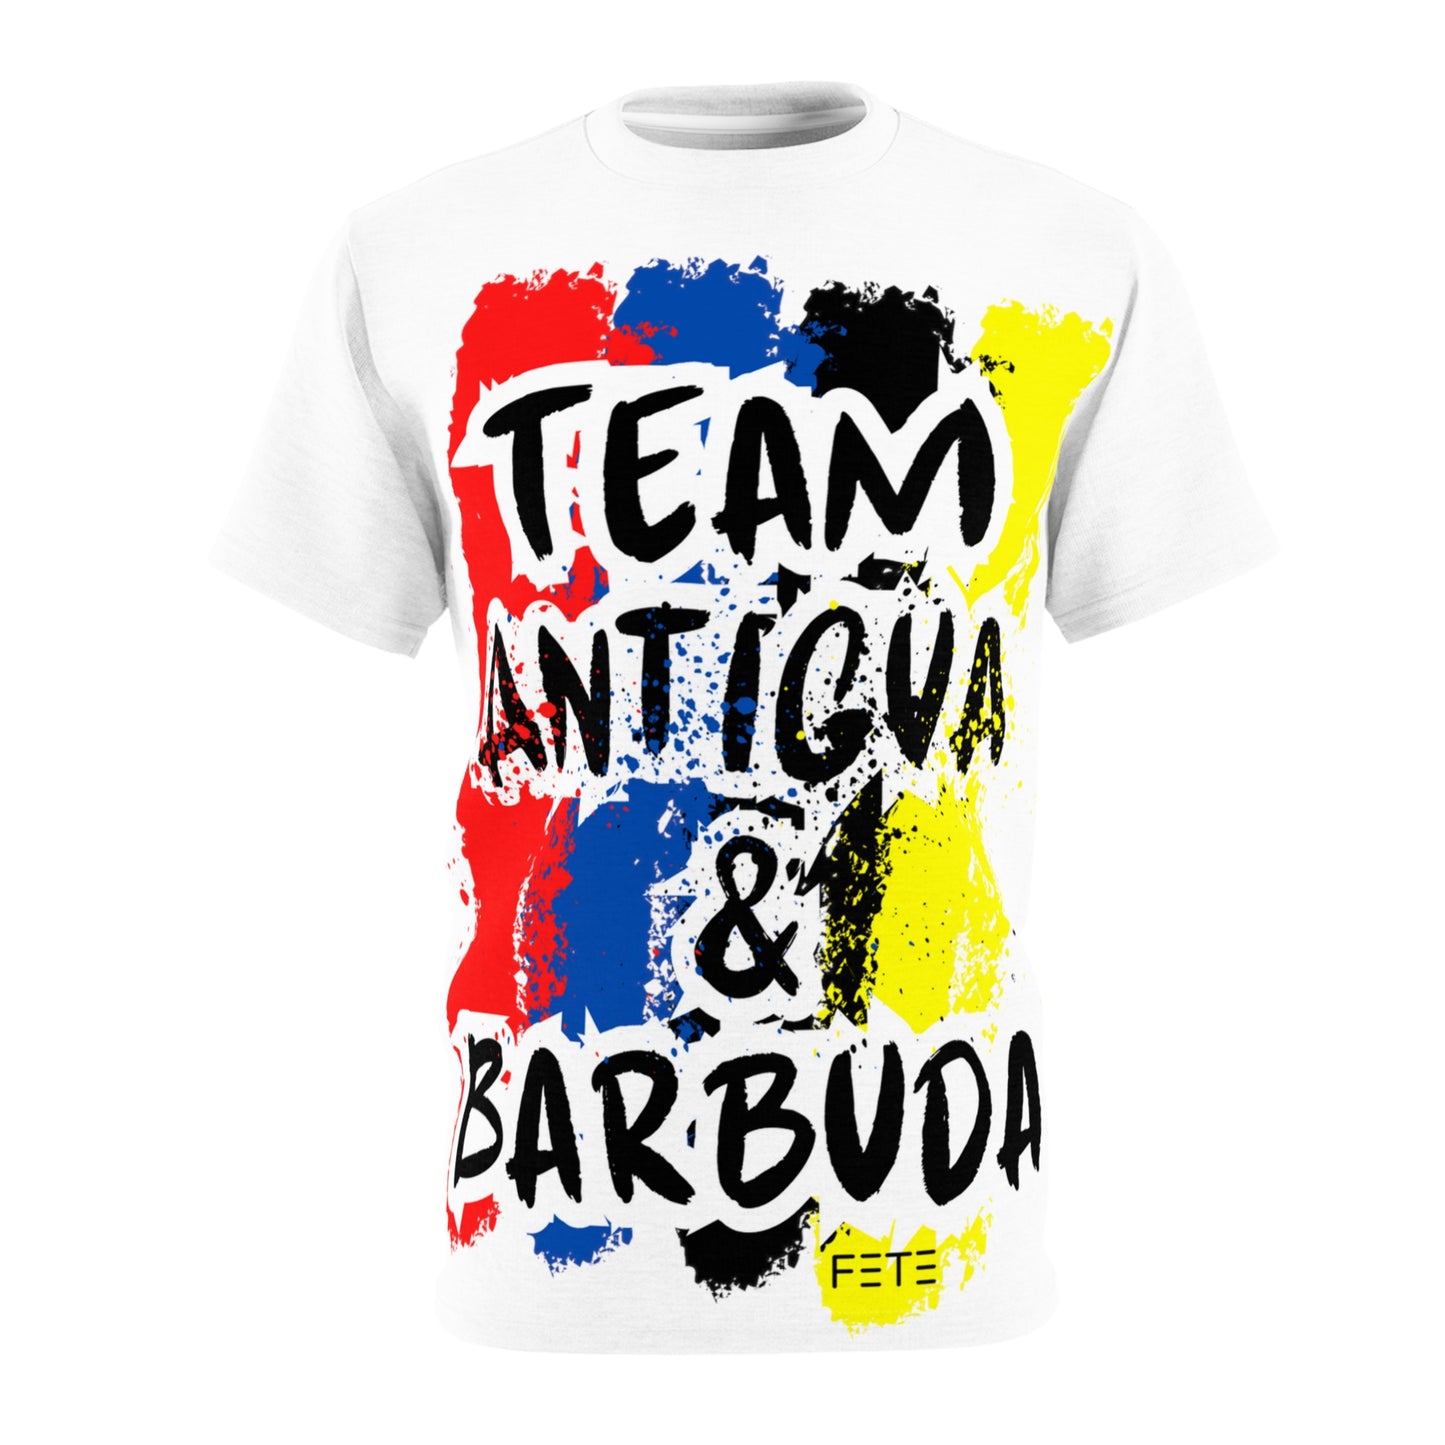 Team Antigua & Barbuda Cut & Sew Tee (AOP)